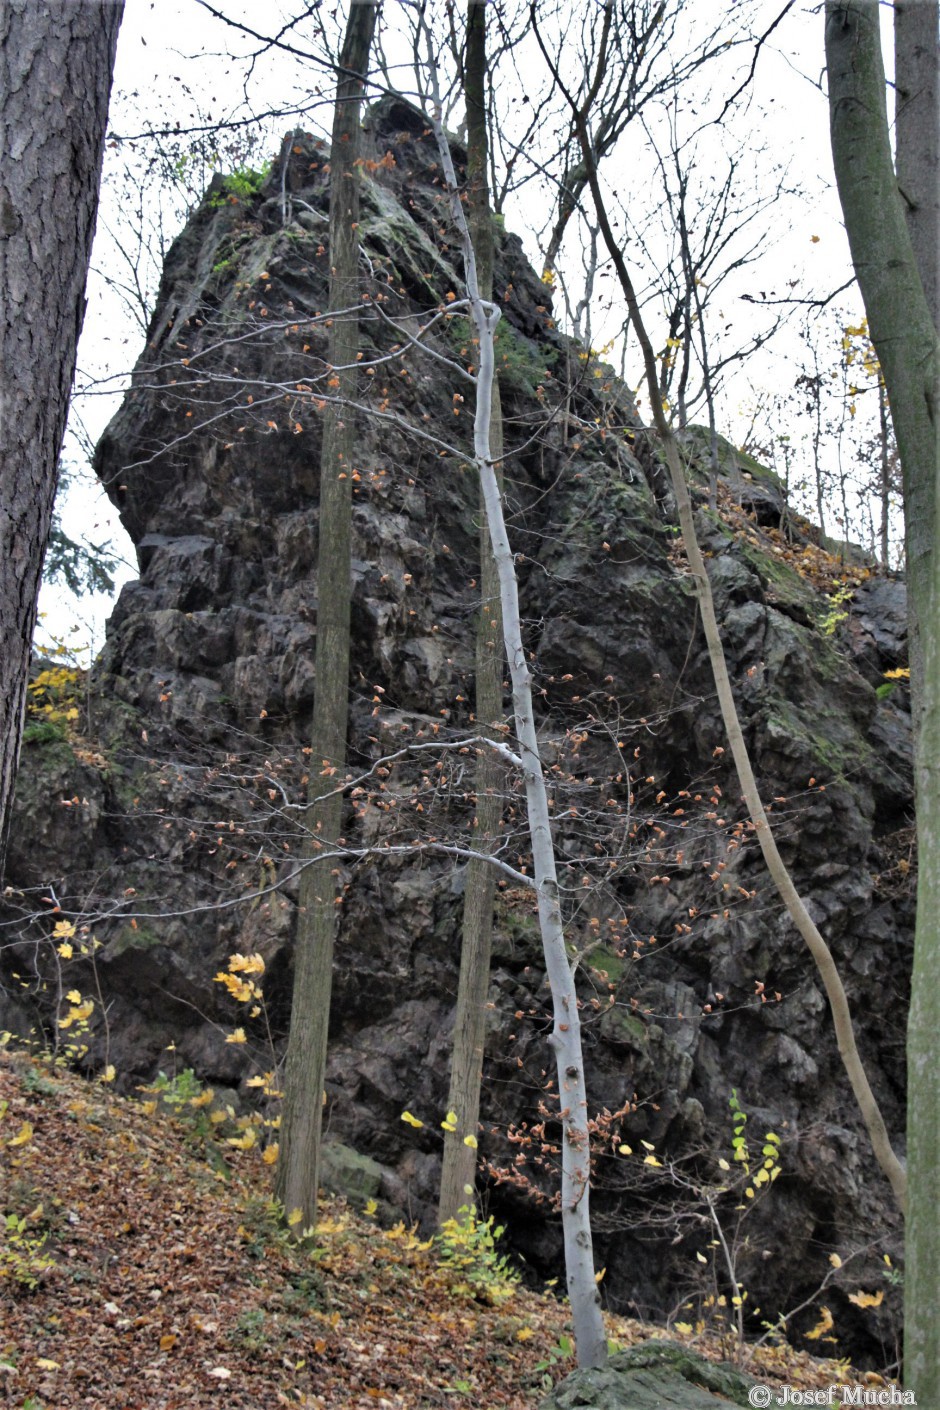 Polštářové lávy a hrad Homberk u obce Vísky - silicitová (buližníková) skála na které stával již zcela rozpadlý hrad Homberk